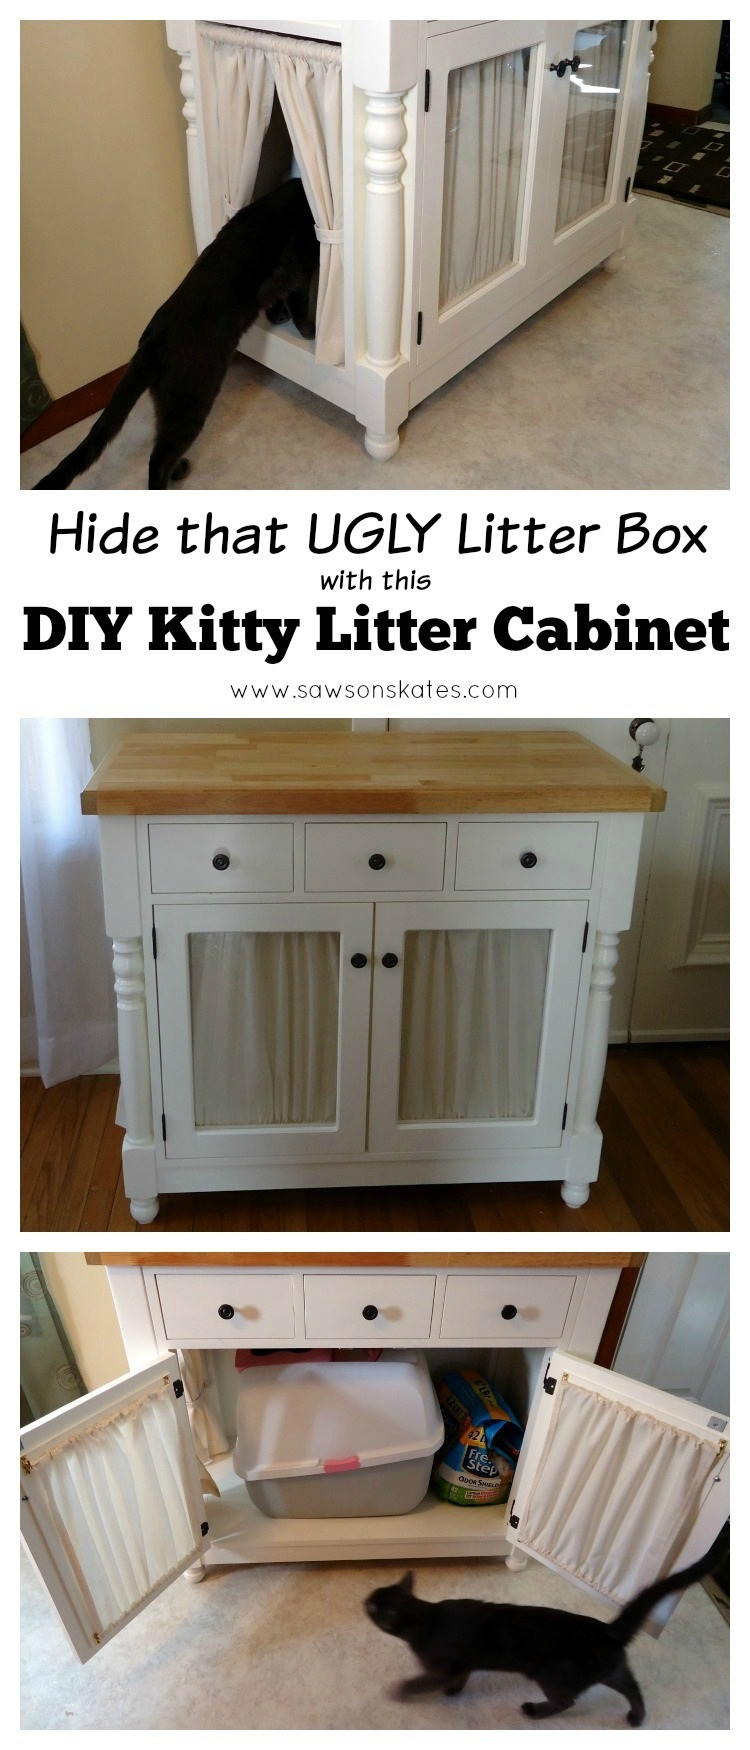 DIY Litter Box Cabinet
 DIY Kitty Litter Cabinet Hides UGLY Litter Box